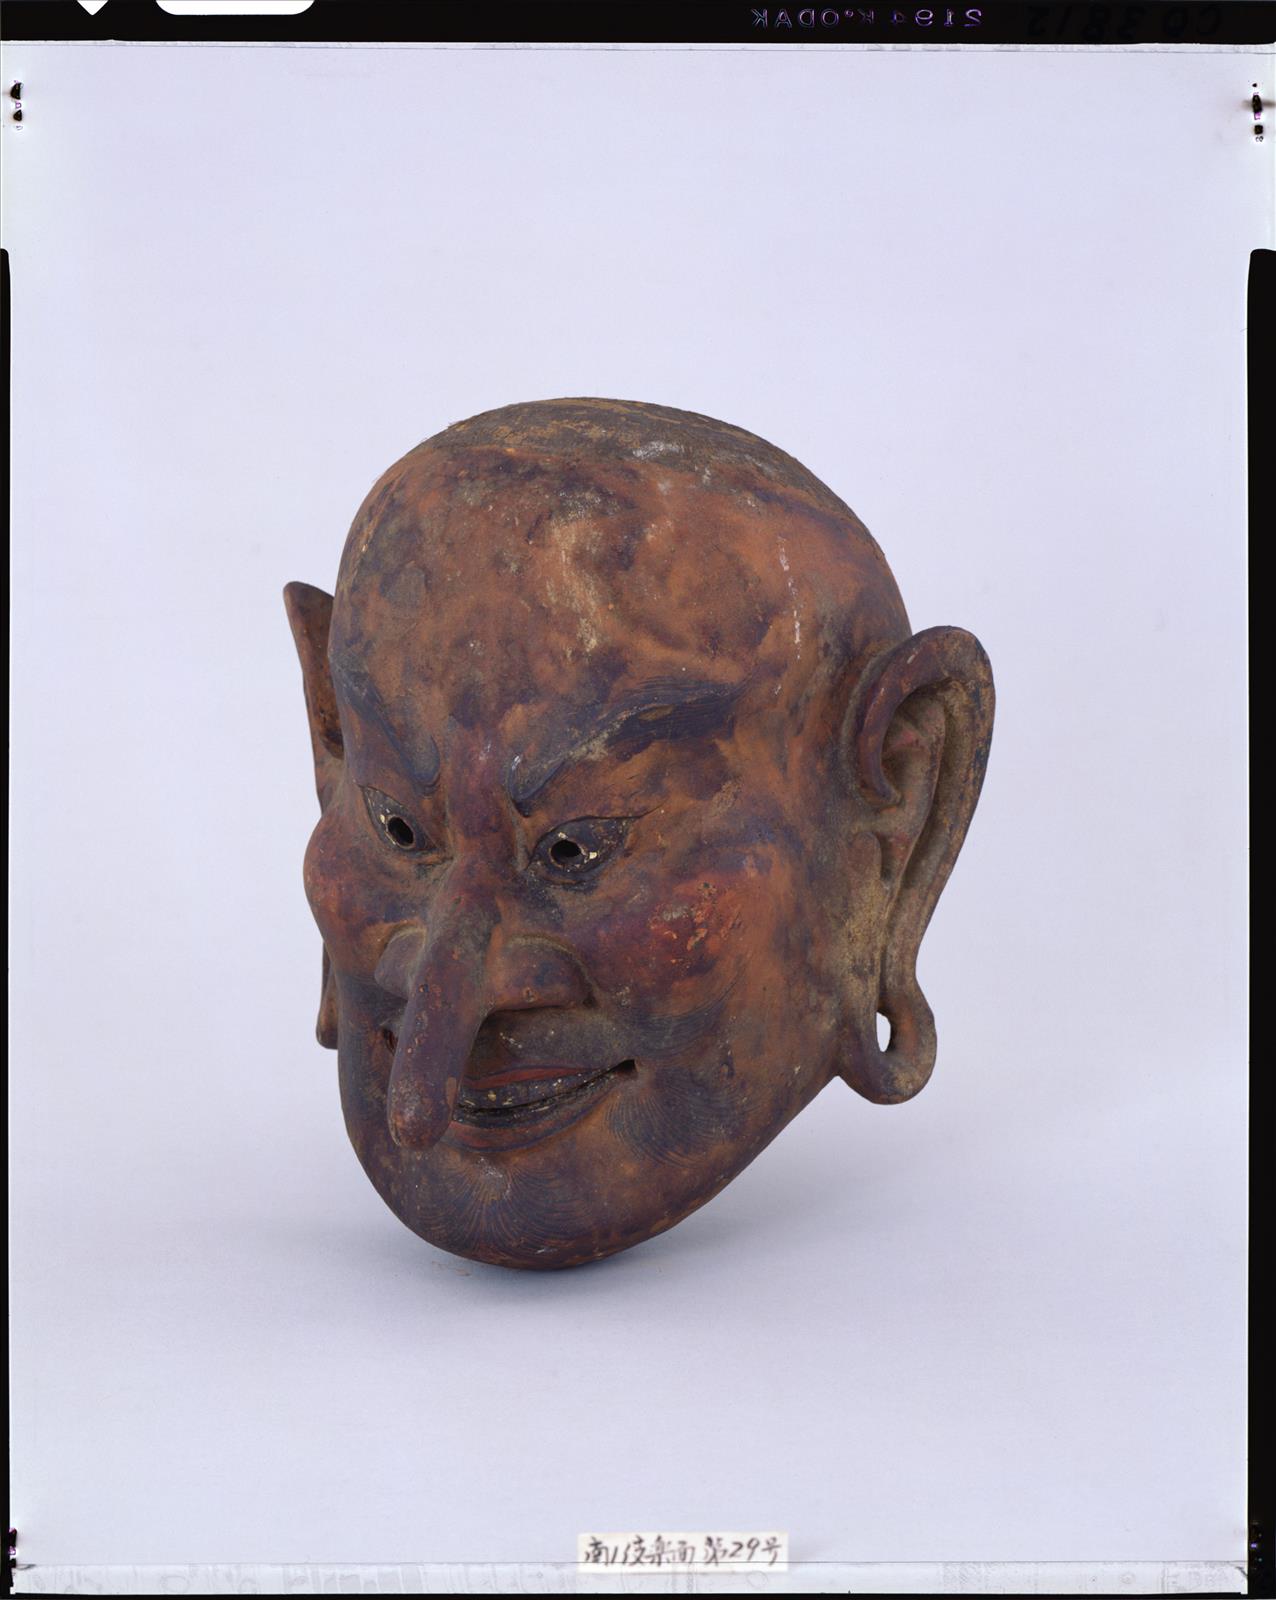 Gigaku| mask of carved wood, No. 29. |Suikojū|. - Shosoin